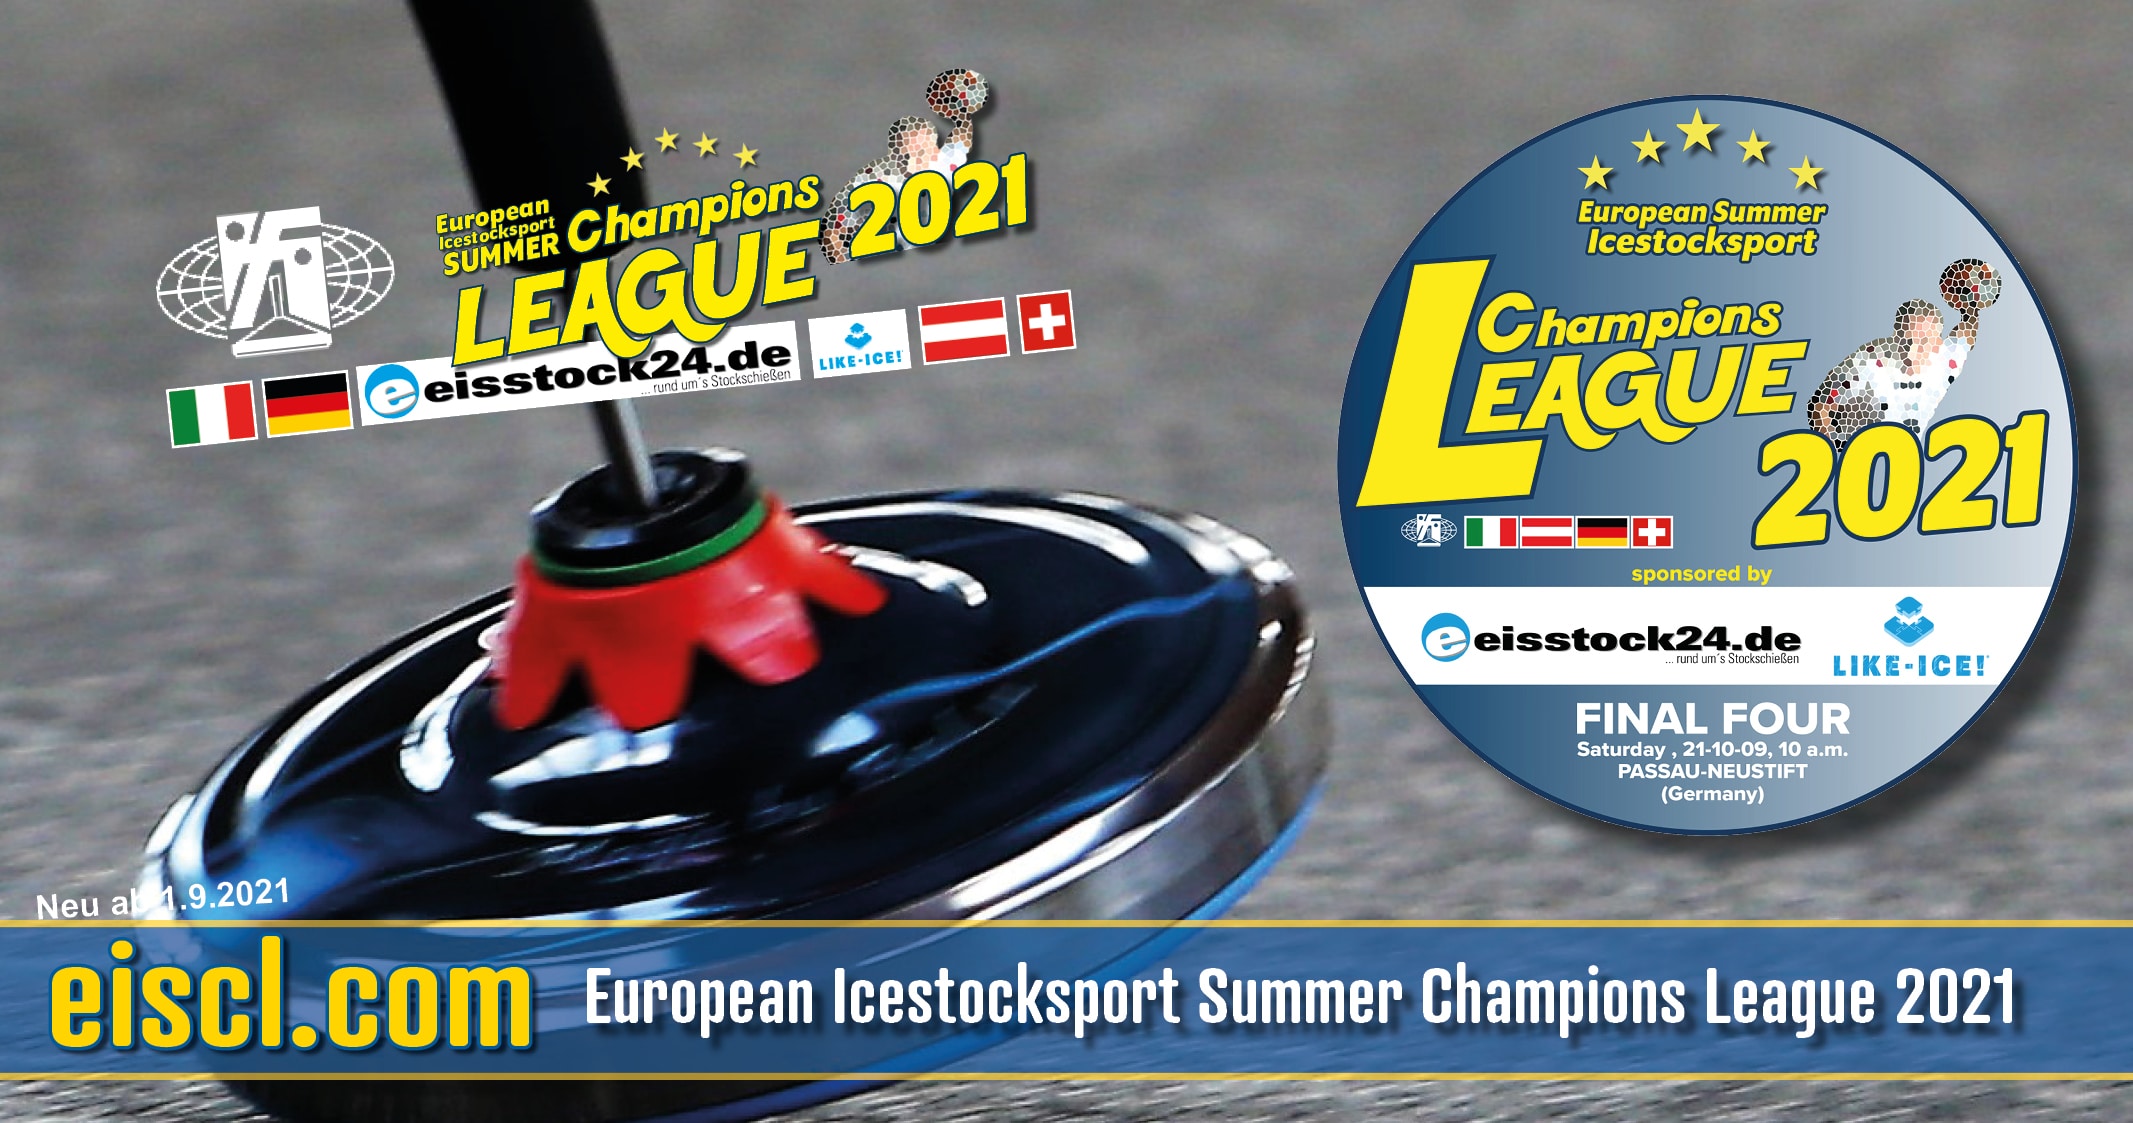 4. European Icestocksport Summer Champions League